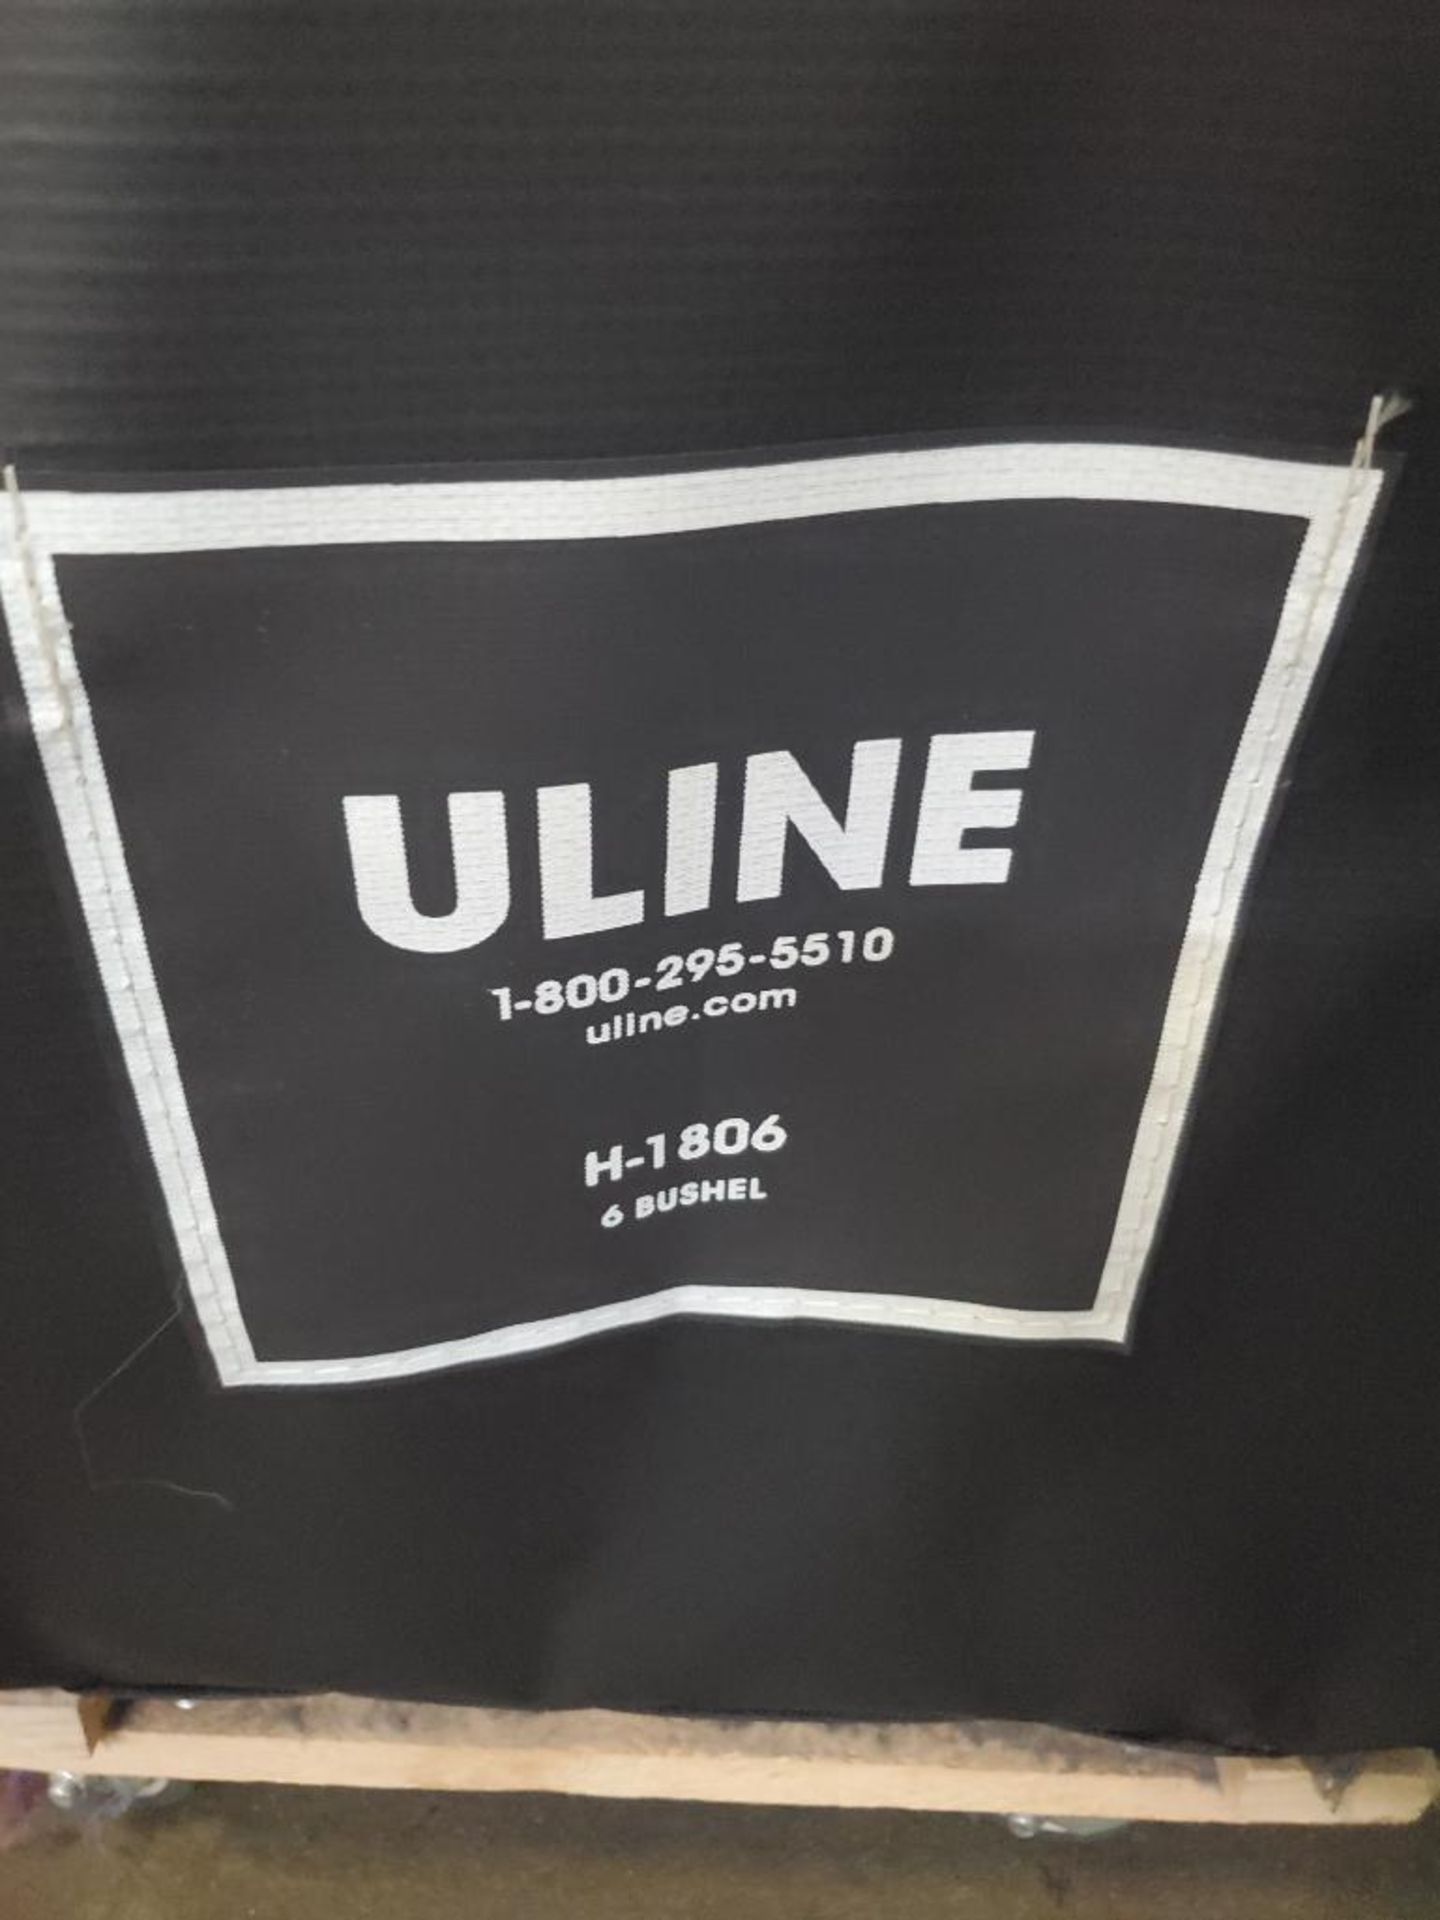 (15) ULINE 6-BUSHEL VINYL BASKET TRUCKS H-1806 - Image 3 of 4